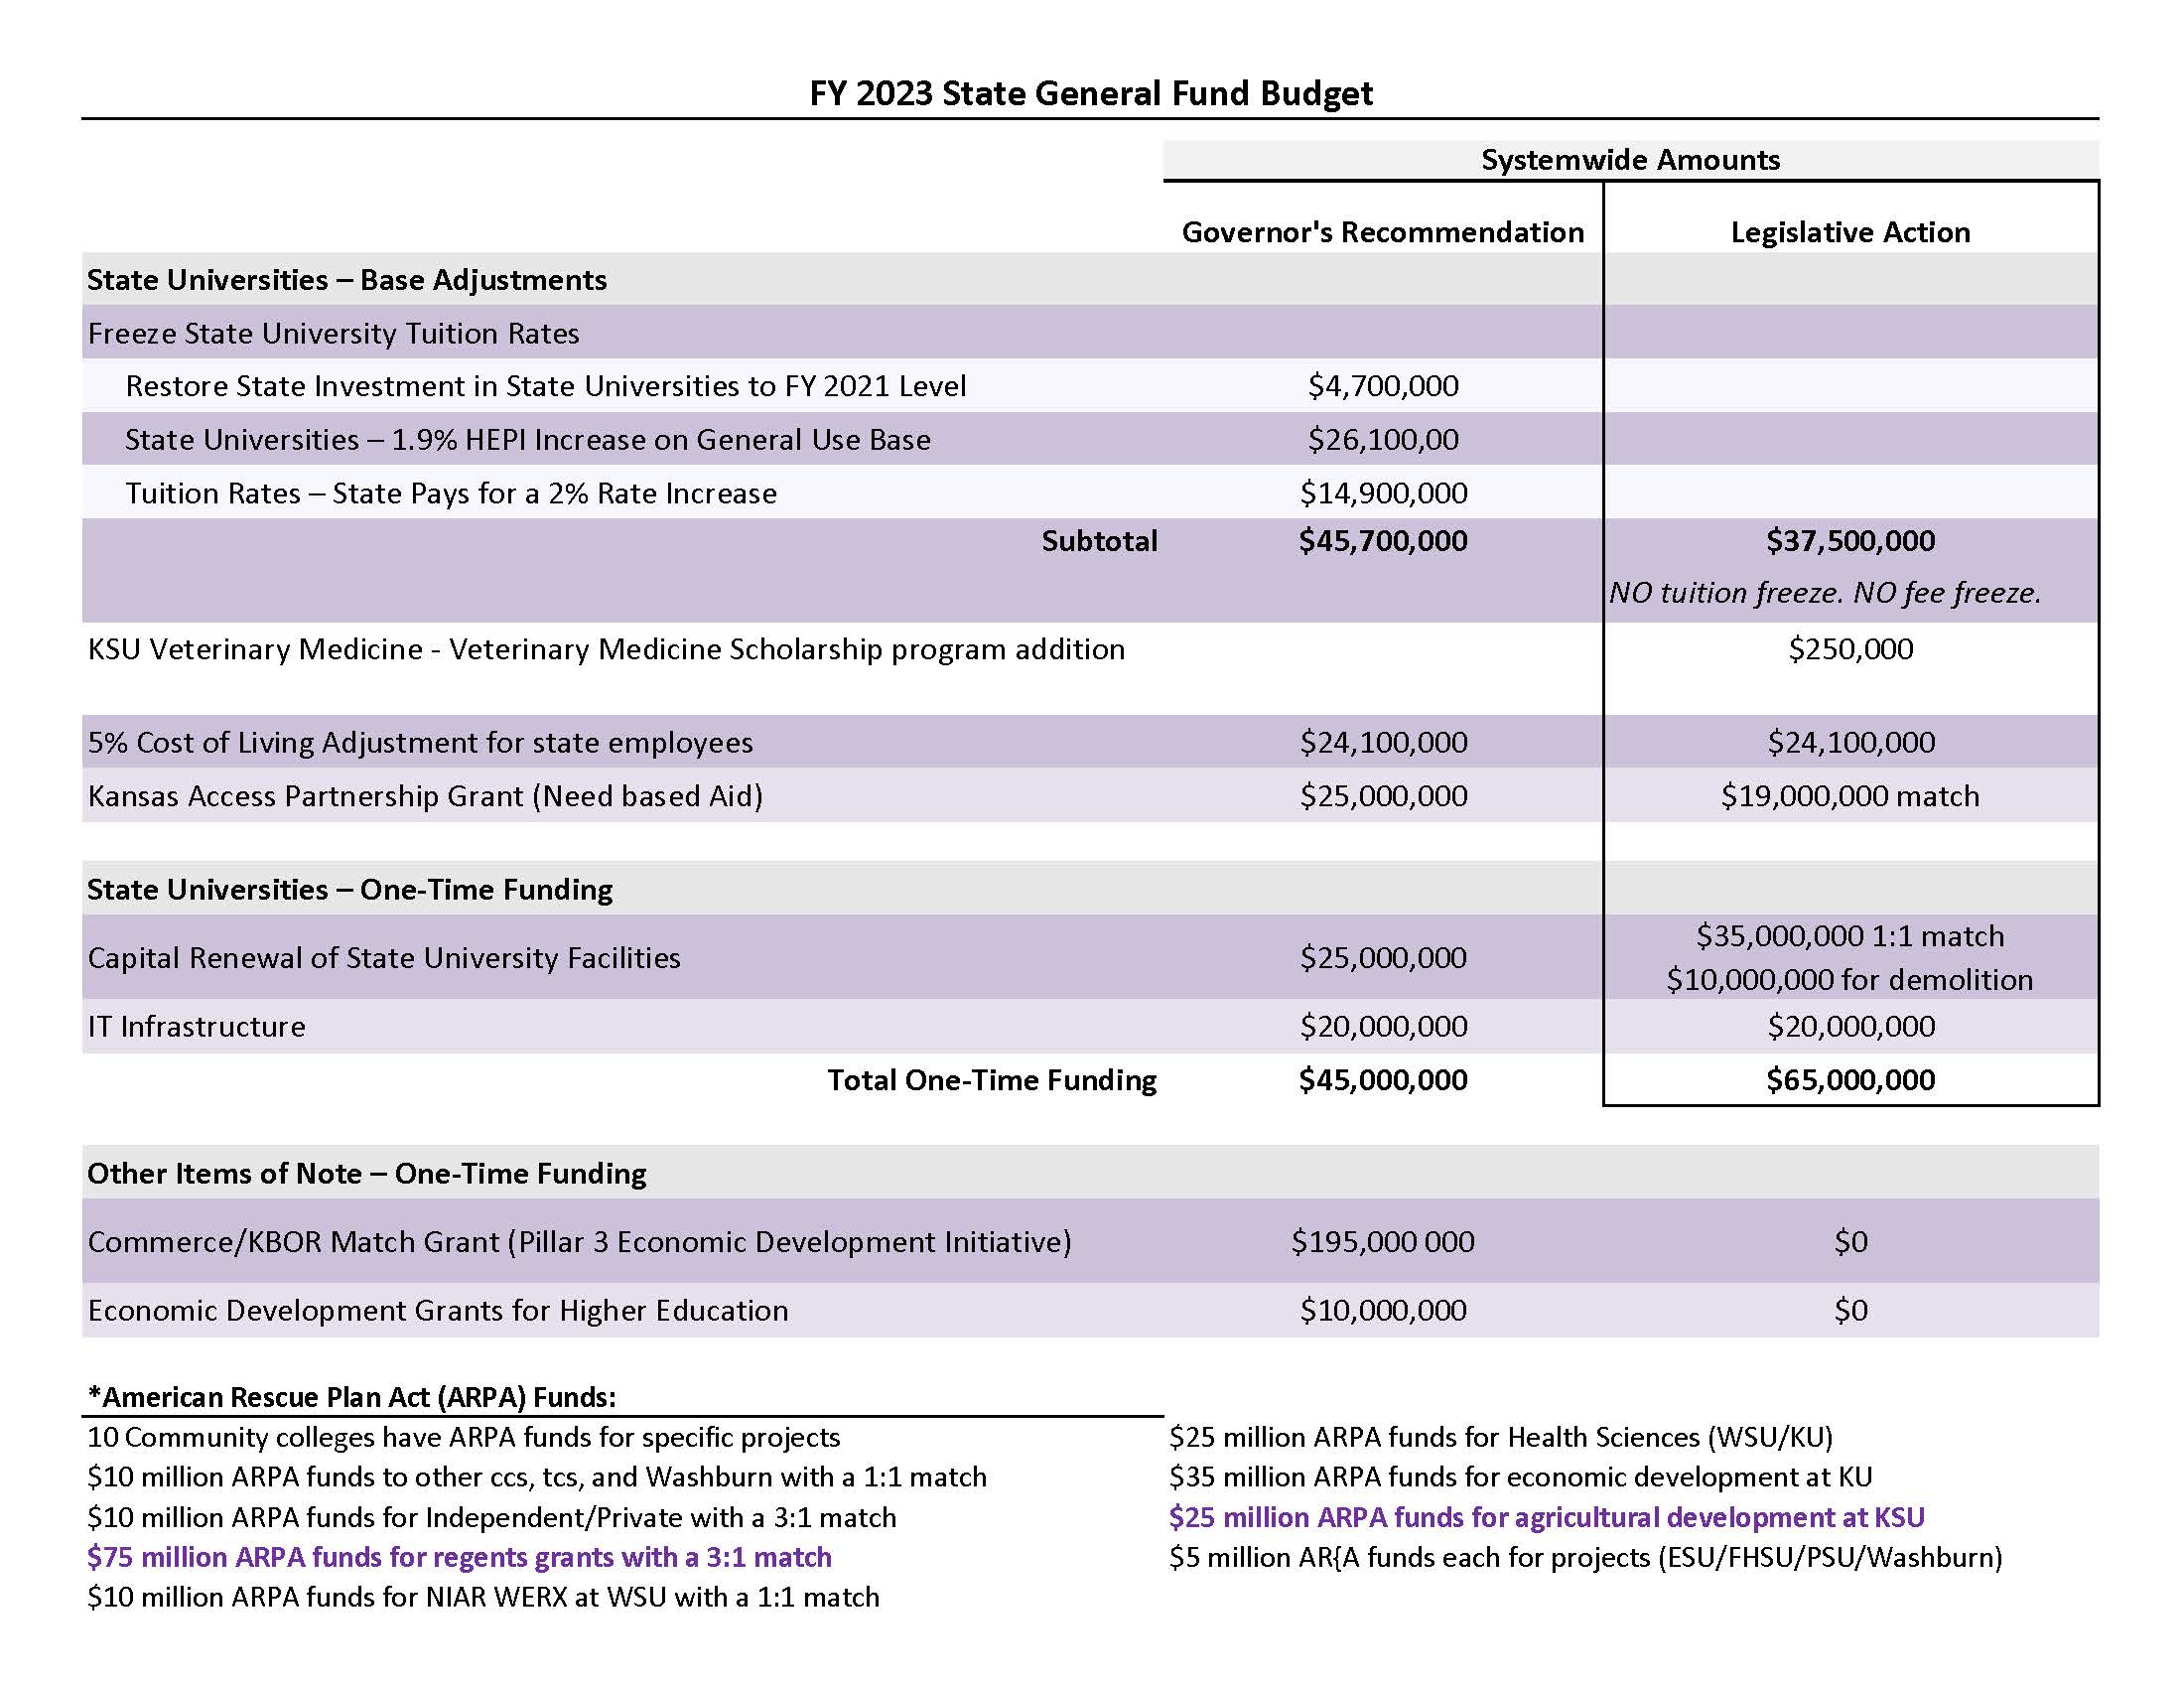 Budget excel sheet